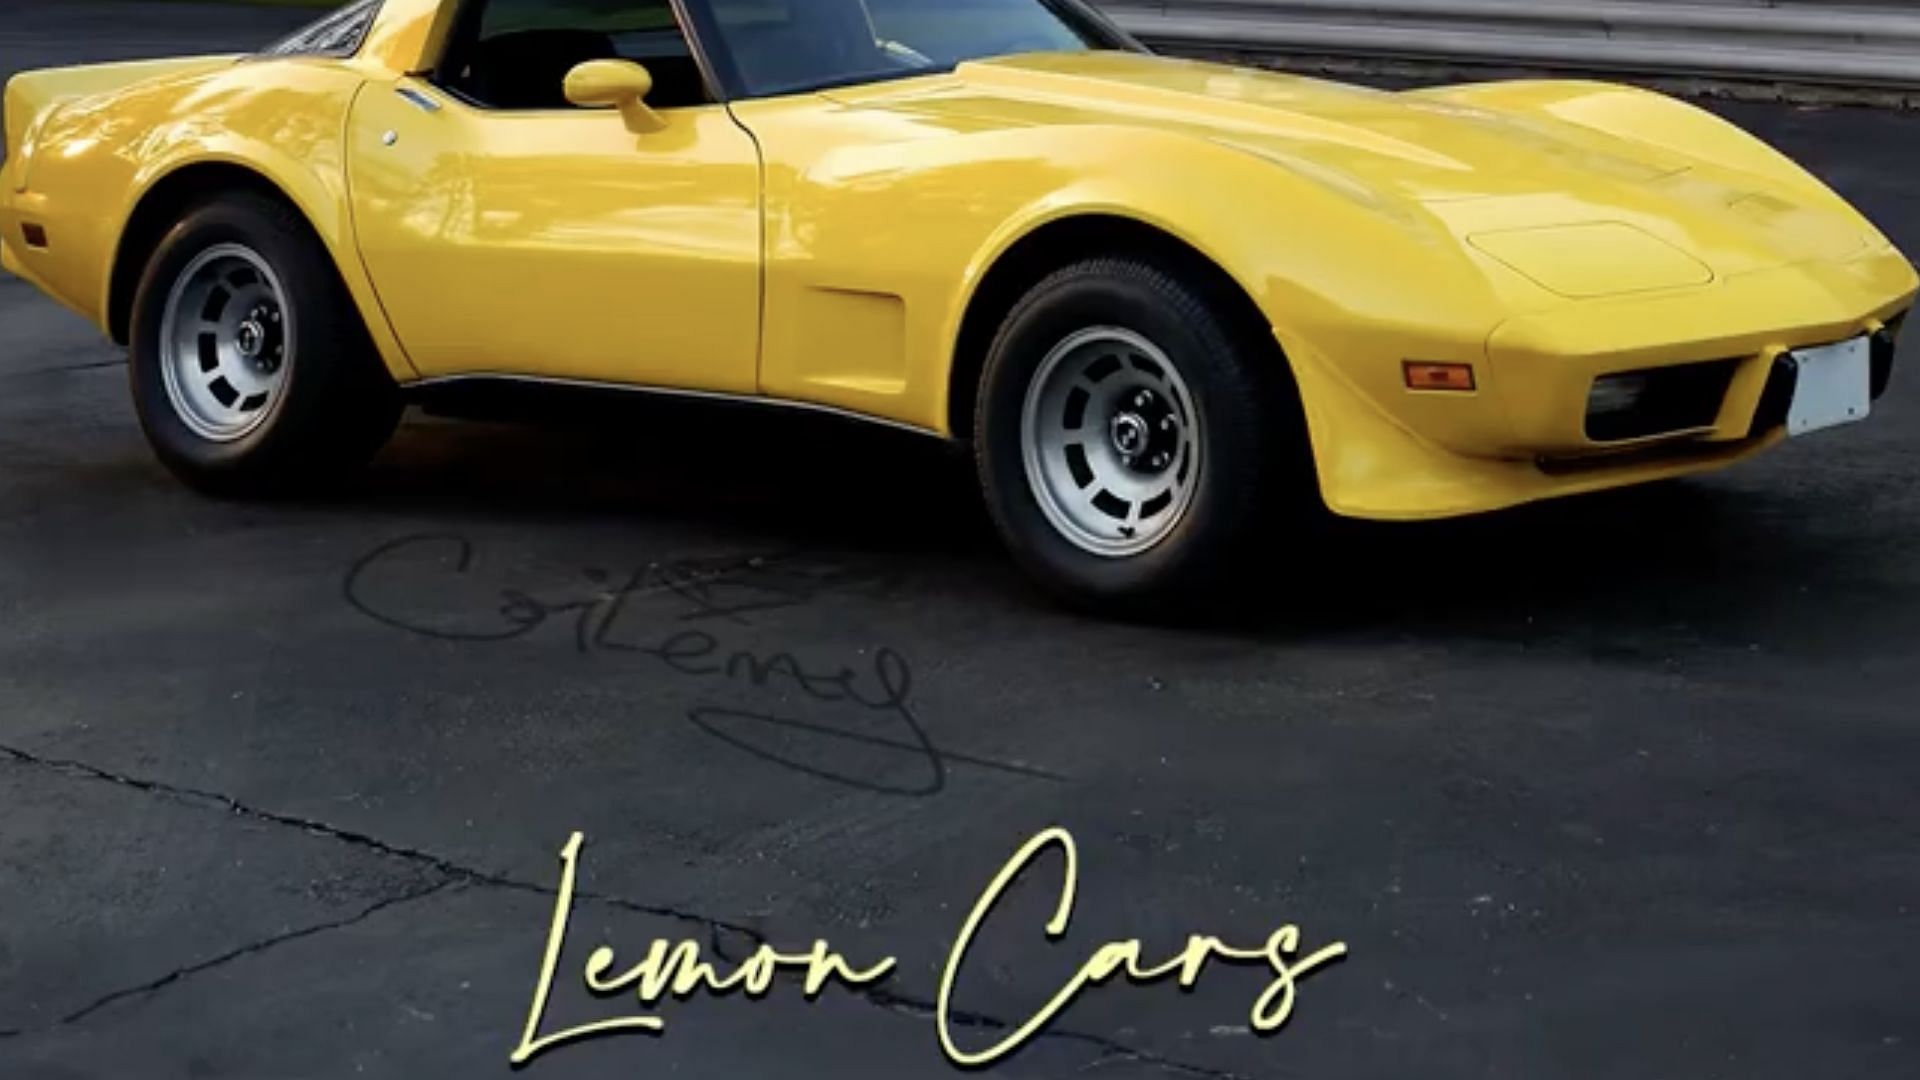 The official album cover for Coi Leray&#039;s latest EP &#039;Lemon Cars&#039; (Image via X/@coi_leray)